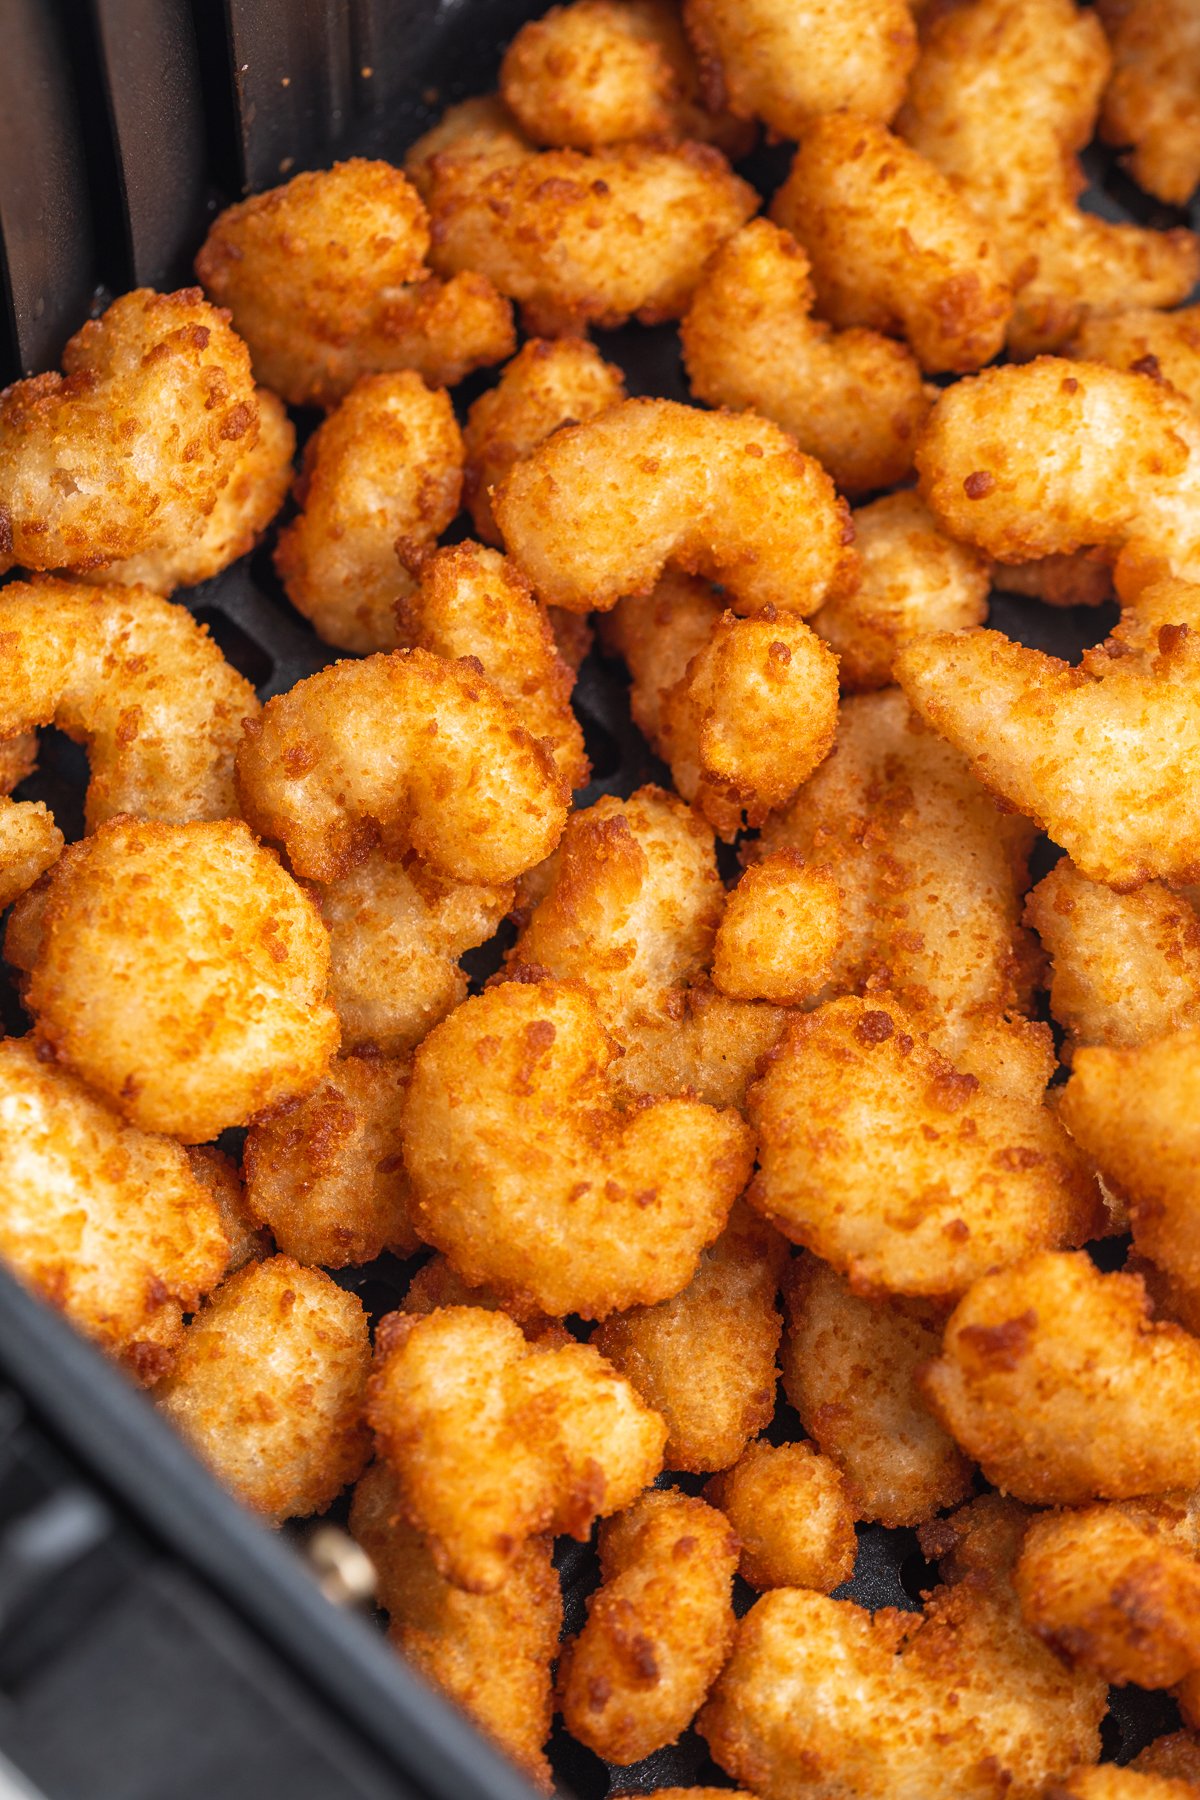 Close-up look at golden, crispy, air fried popcorn shrimp in an air fryer basket.